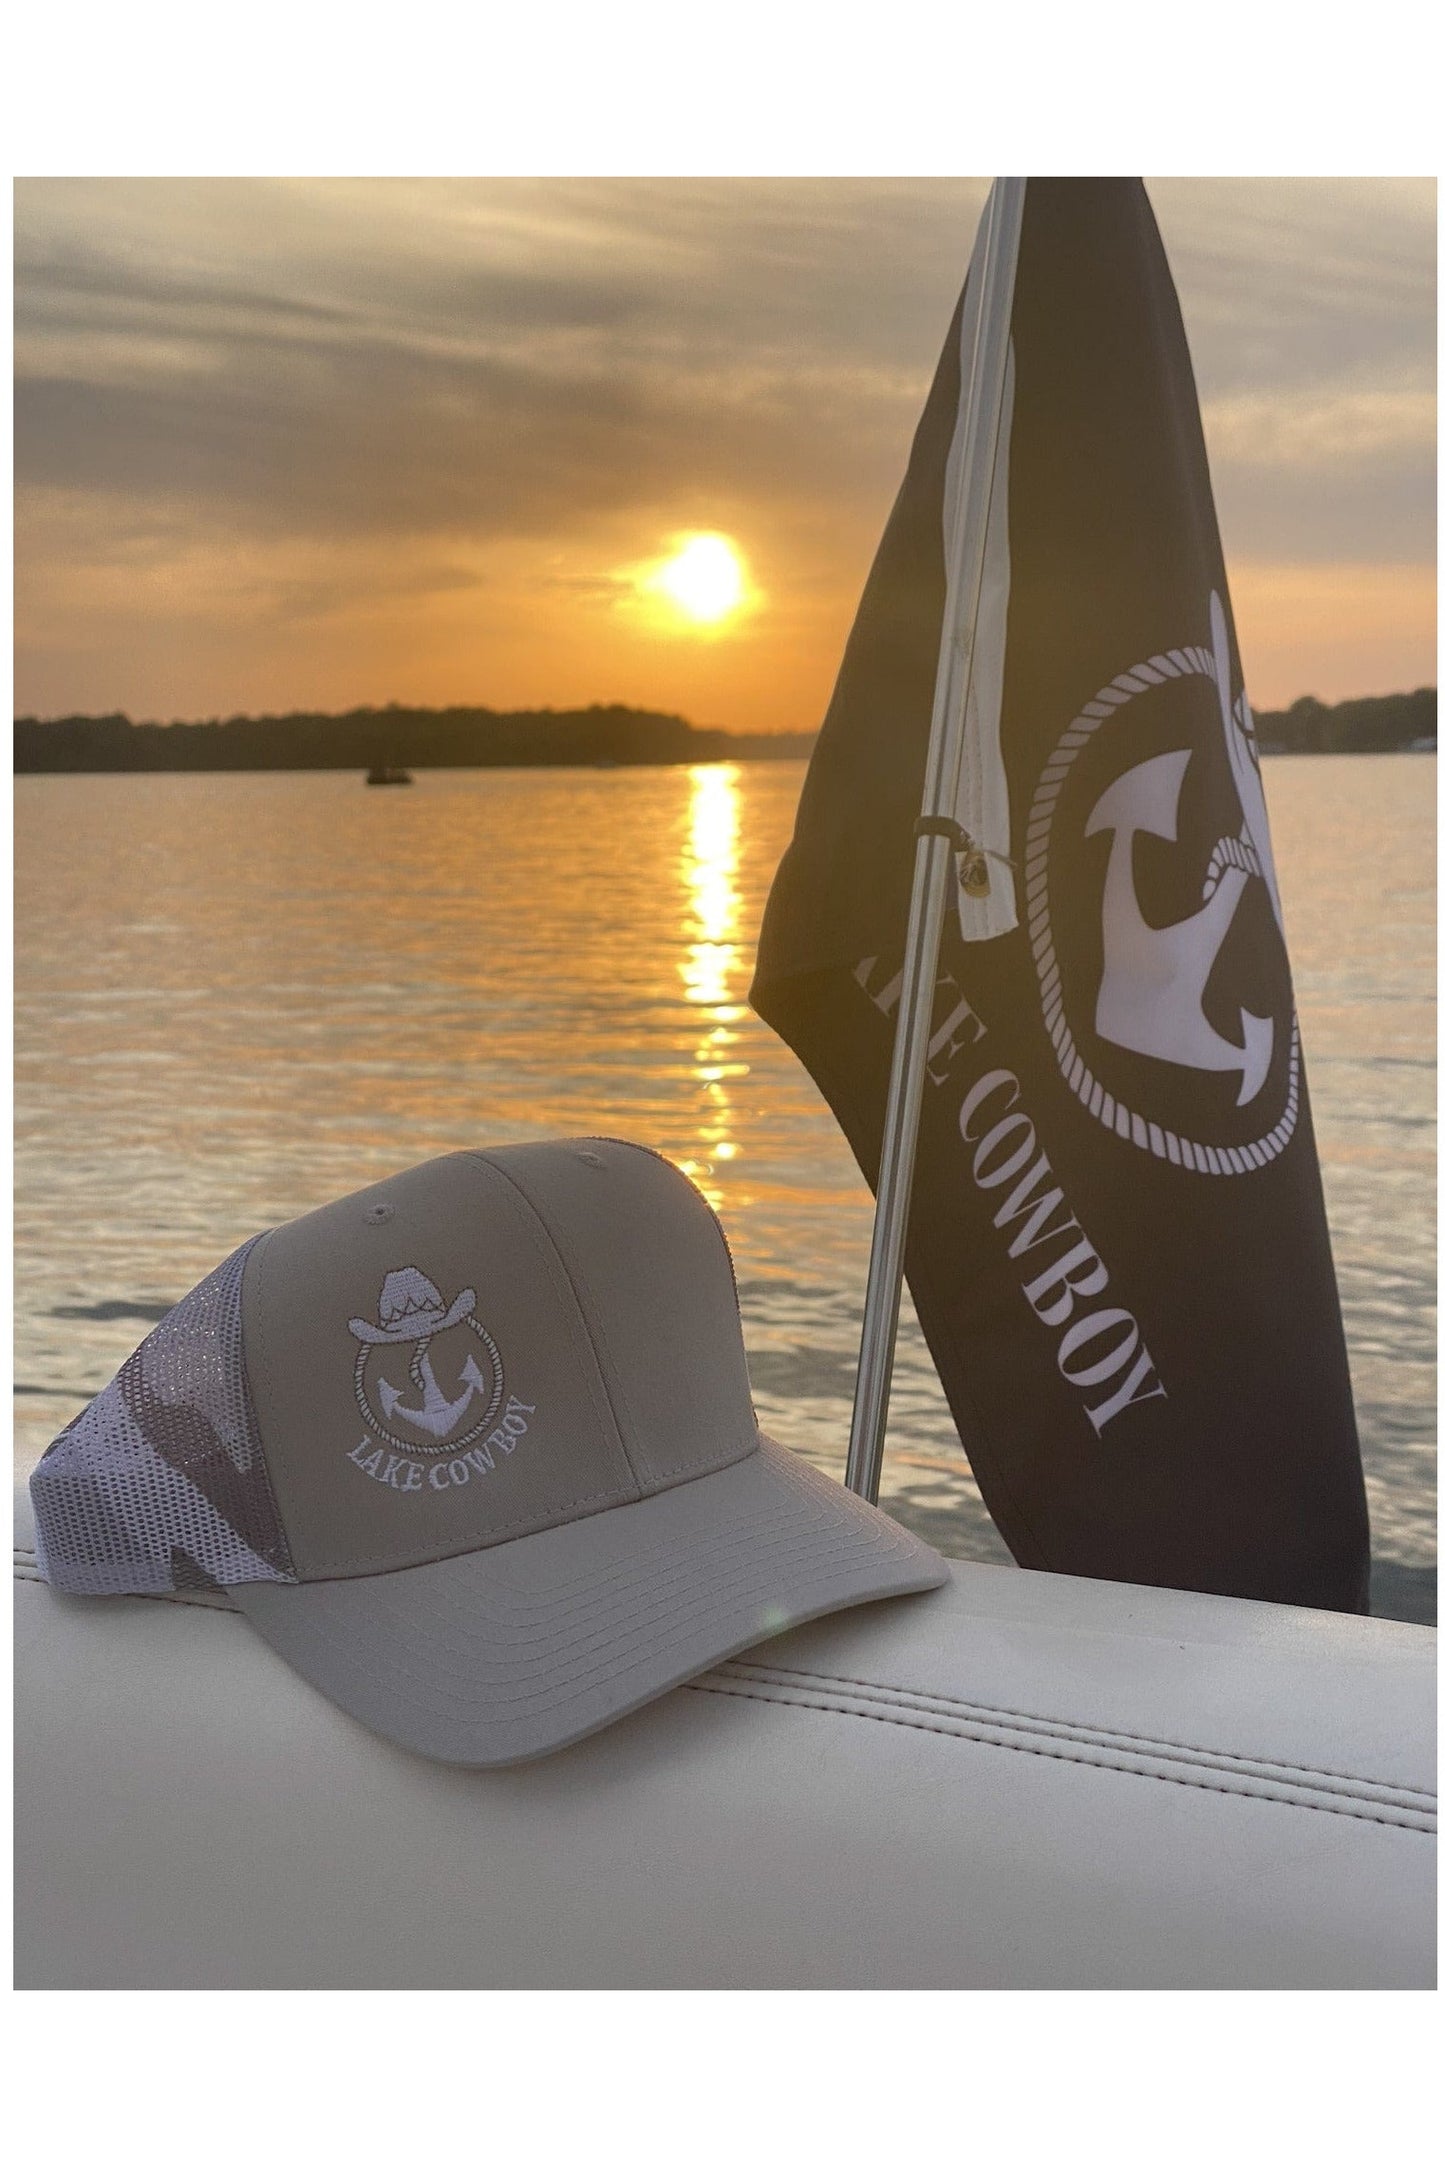 Photo of a Lake Cowboy Baseball Hat (Desert Camo) on the back of a Sea Ray boat at sunset on Lake Minnetonka 